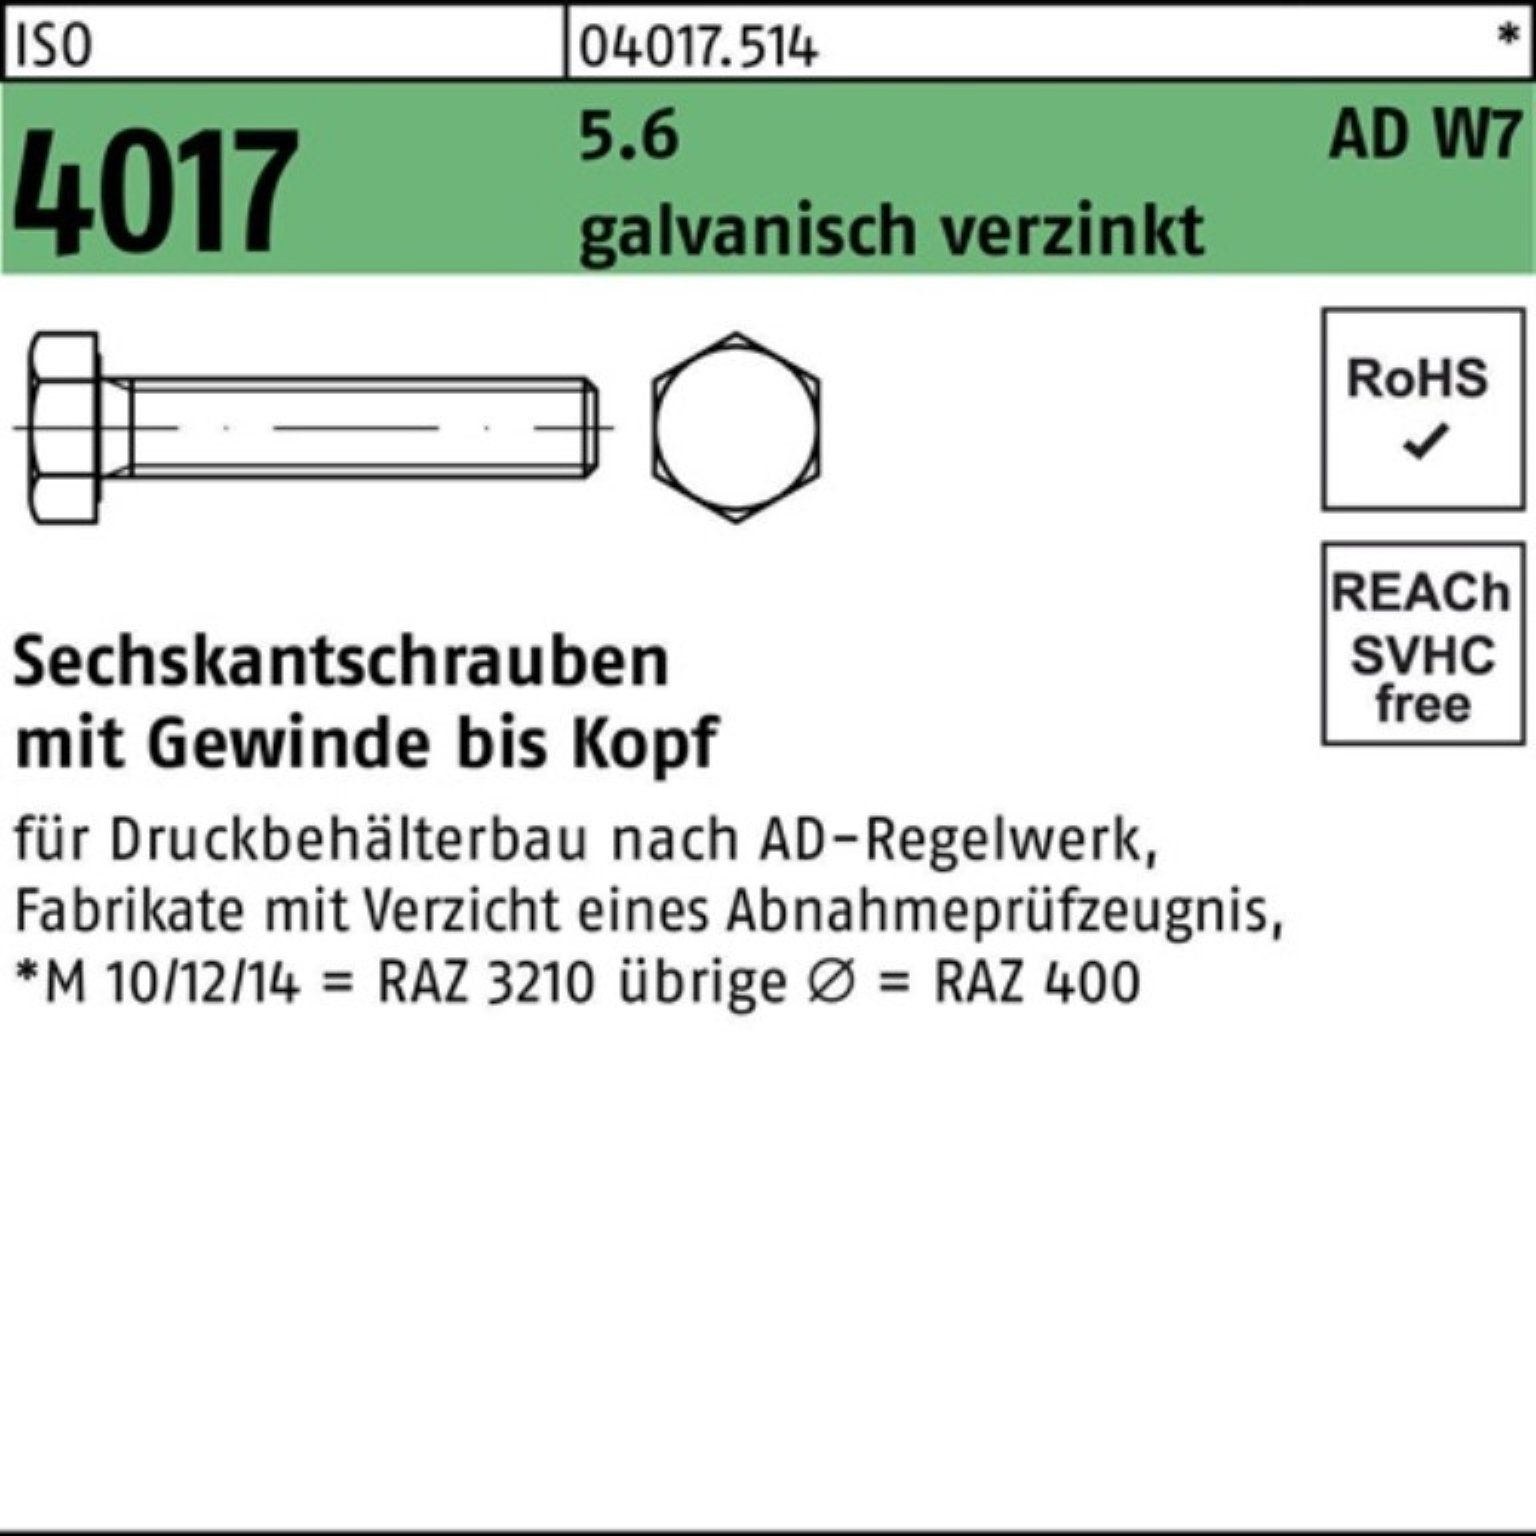 galv.verz. Pack 80 4017 5.6 Bufab VG Sechskantschraube 100er AD Sechskantschraube W7 M10x ISO